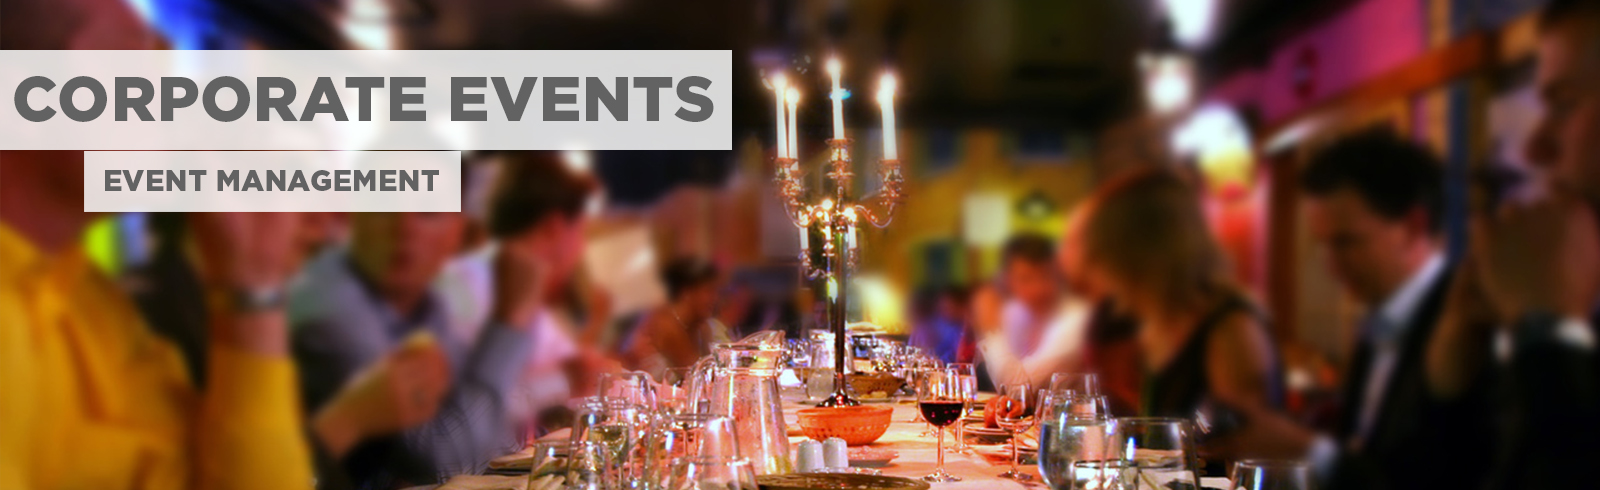 Event management - Corporate events